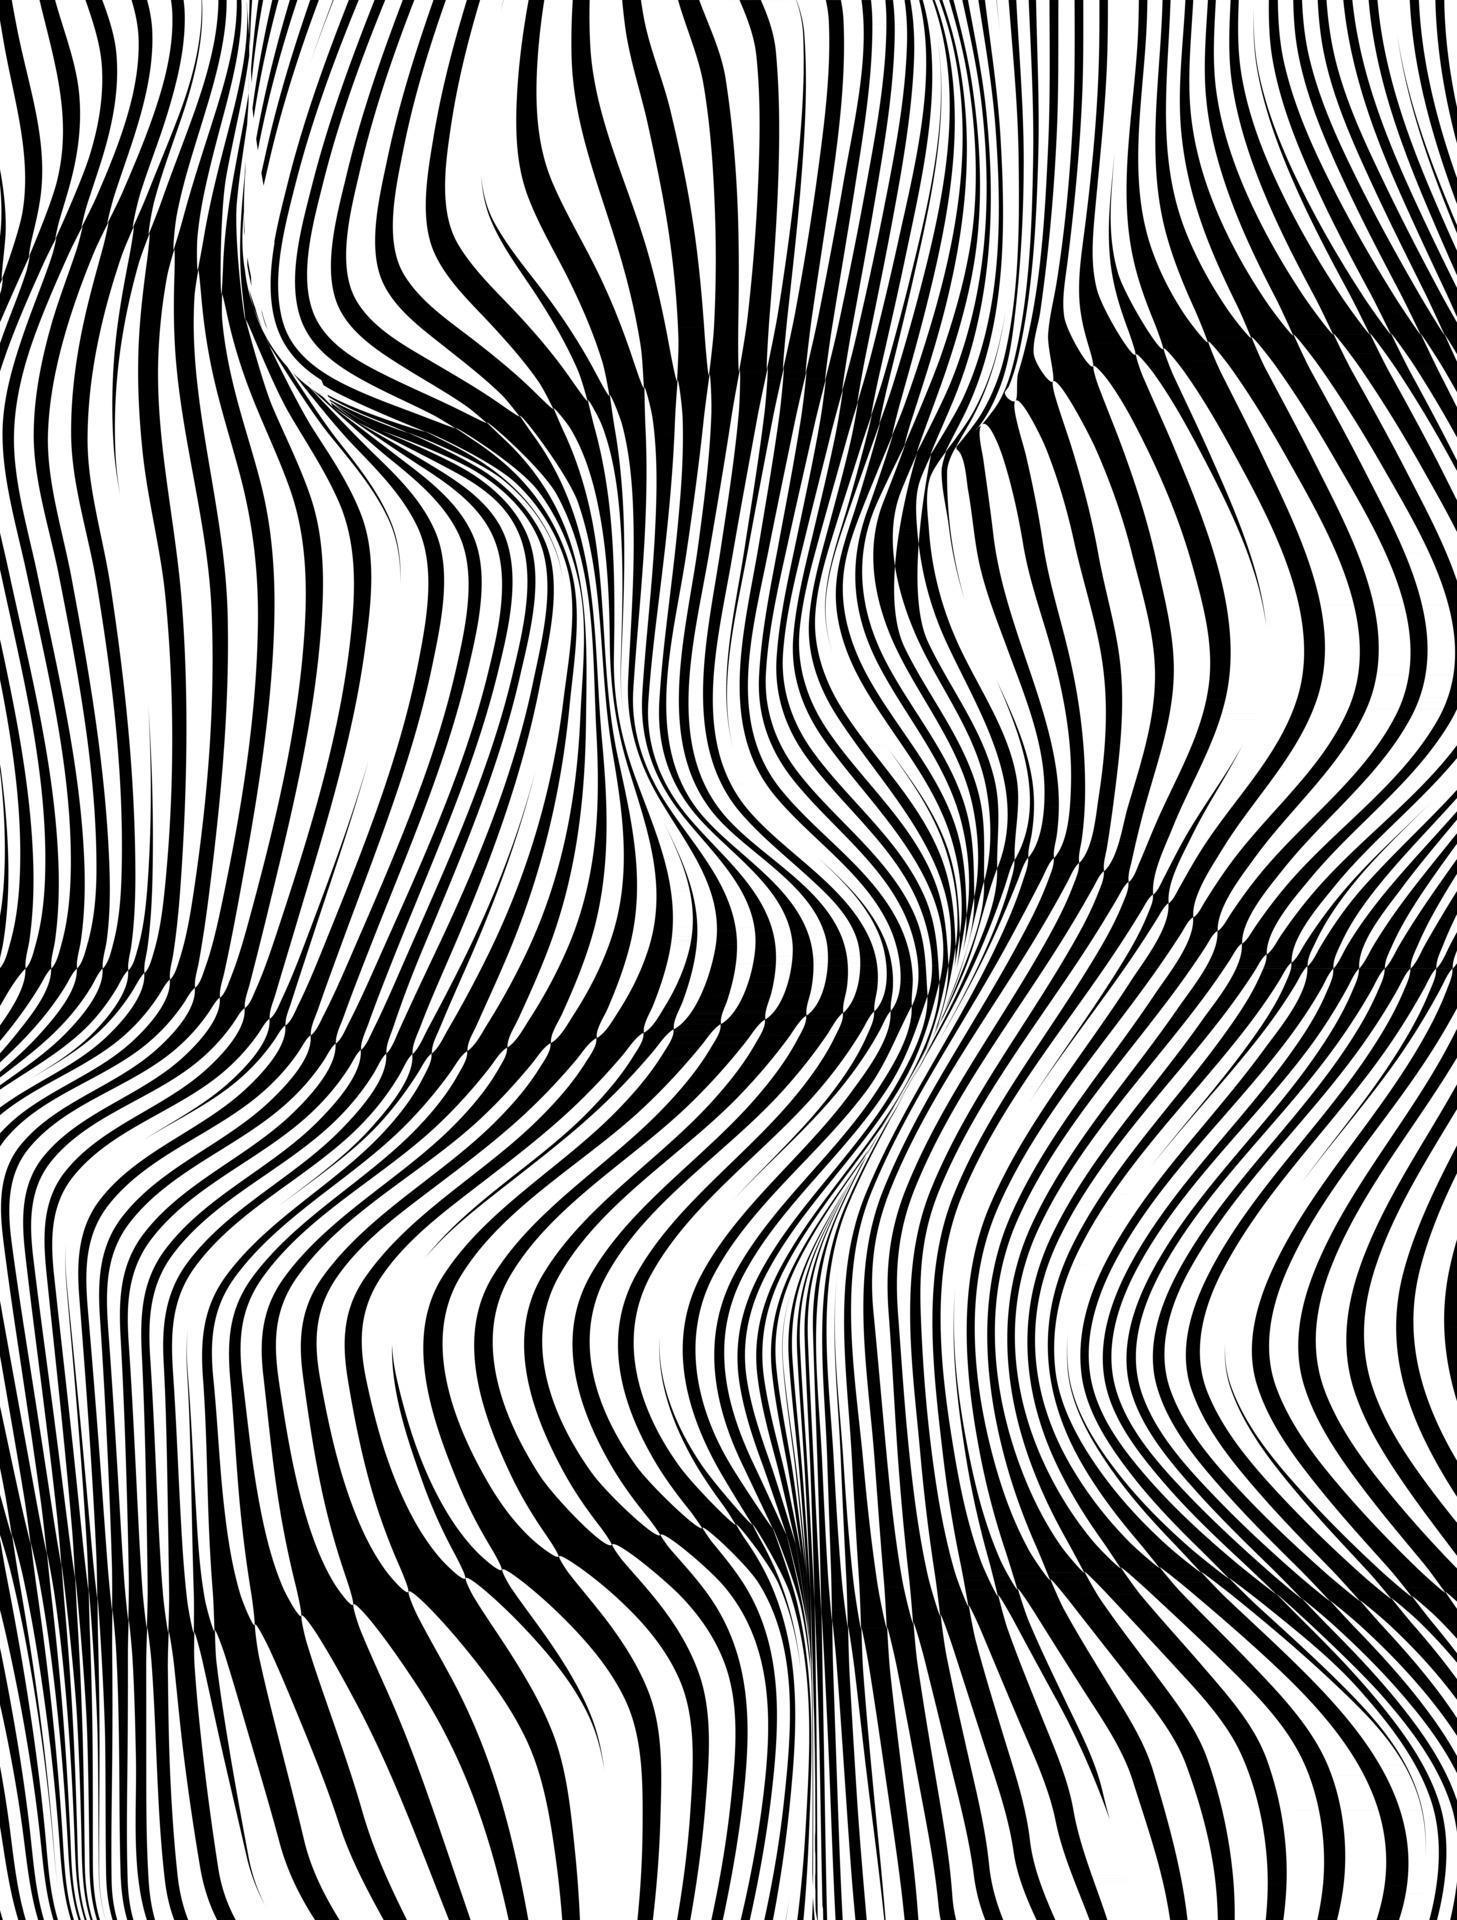 abstrakte Welle Zebramuster Hintergrund Vektor Illustration 2850210 